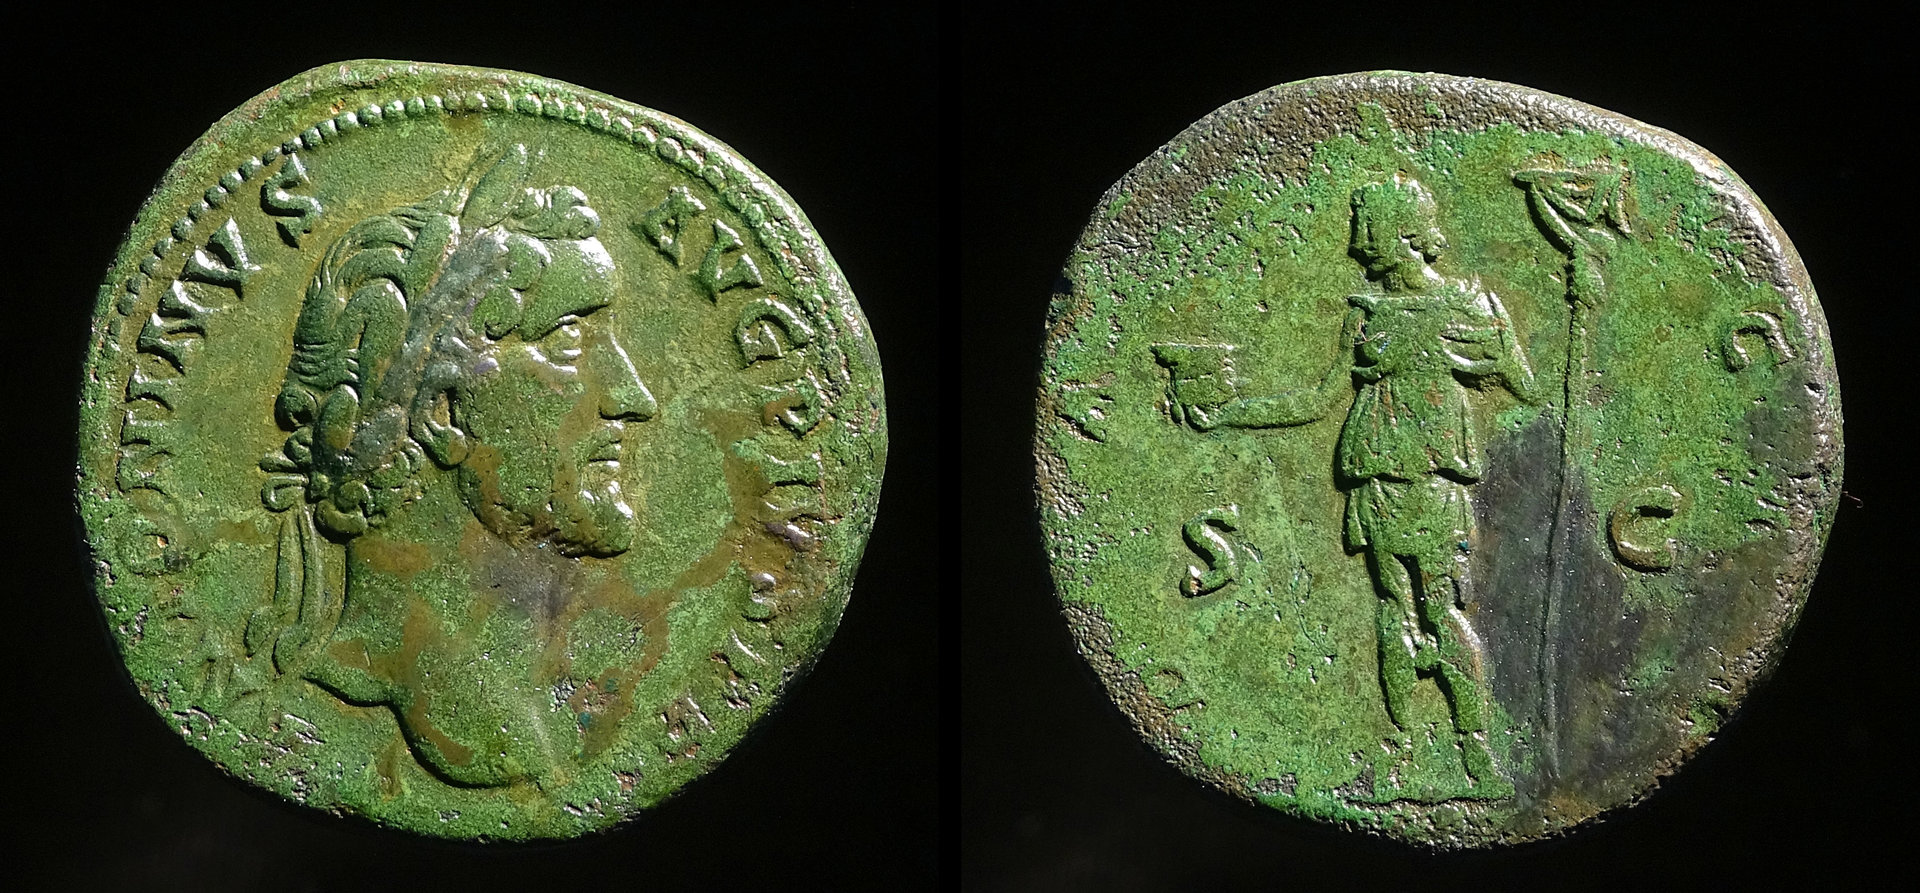 III Antoninus Pius 0581var Dacia box and vexillum 7-0334 edited.jpg